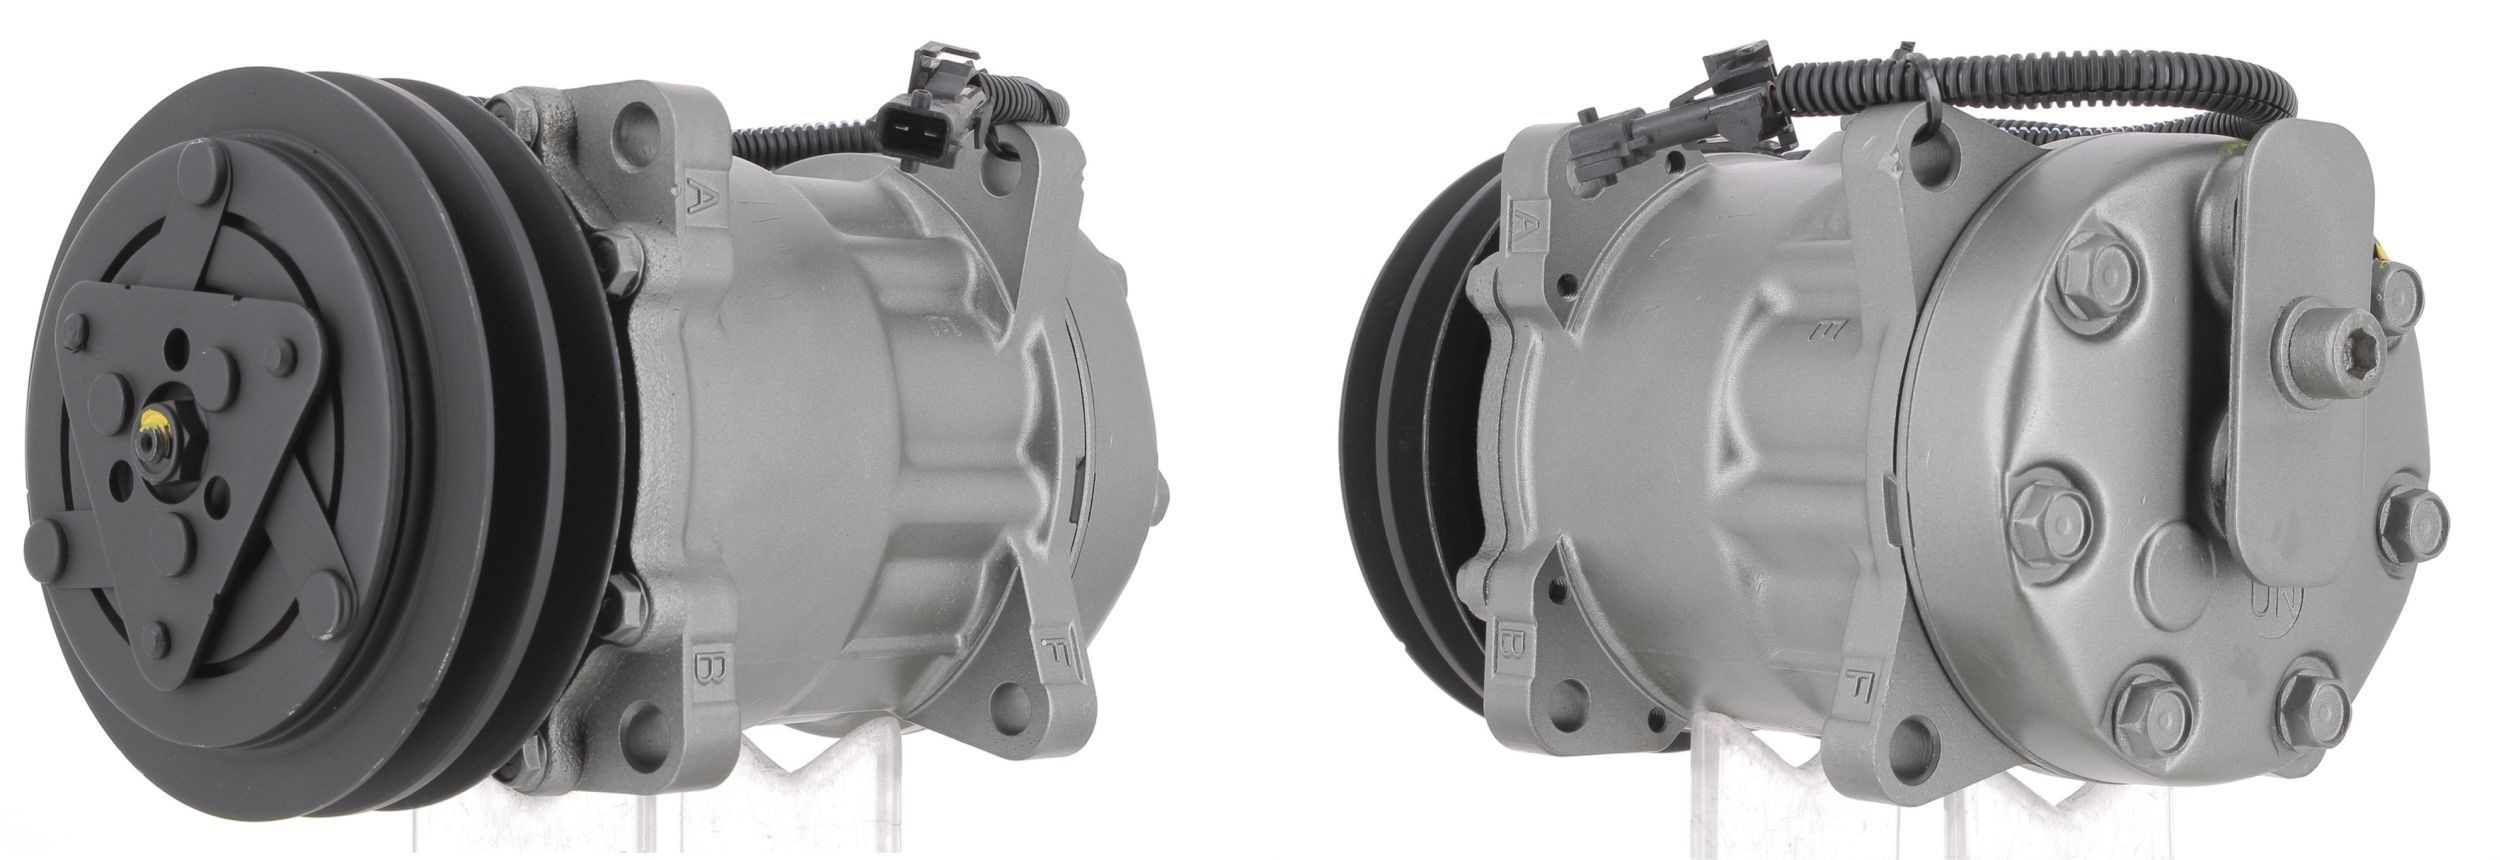 ROTOVIS Automotive Electrics FRC45635 Klimakompressor für RENAULT TRUCKS Midlum LKW in Original Qualität